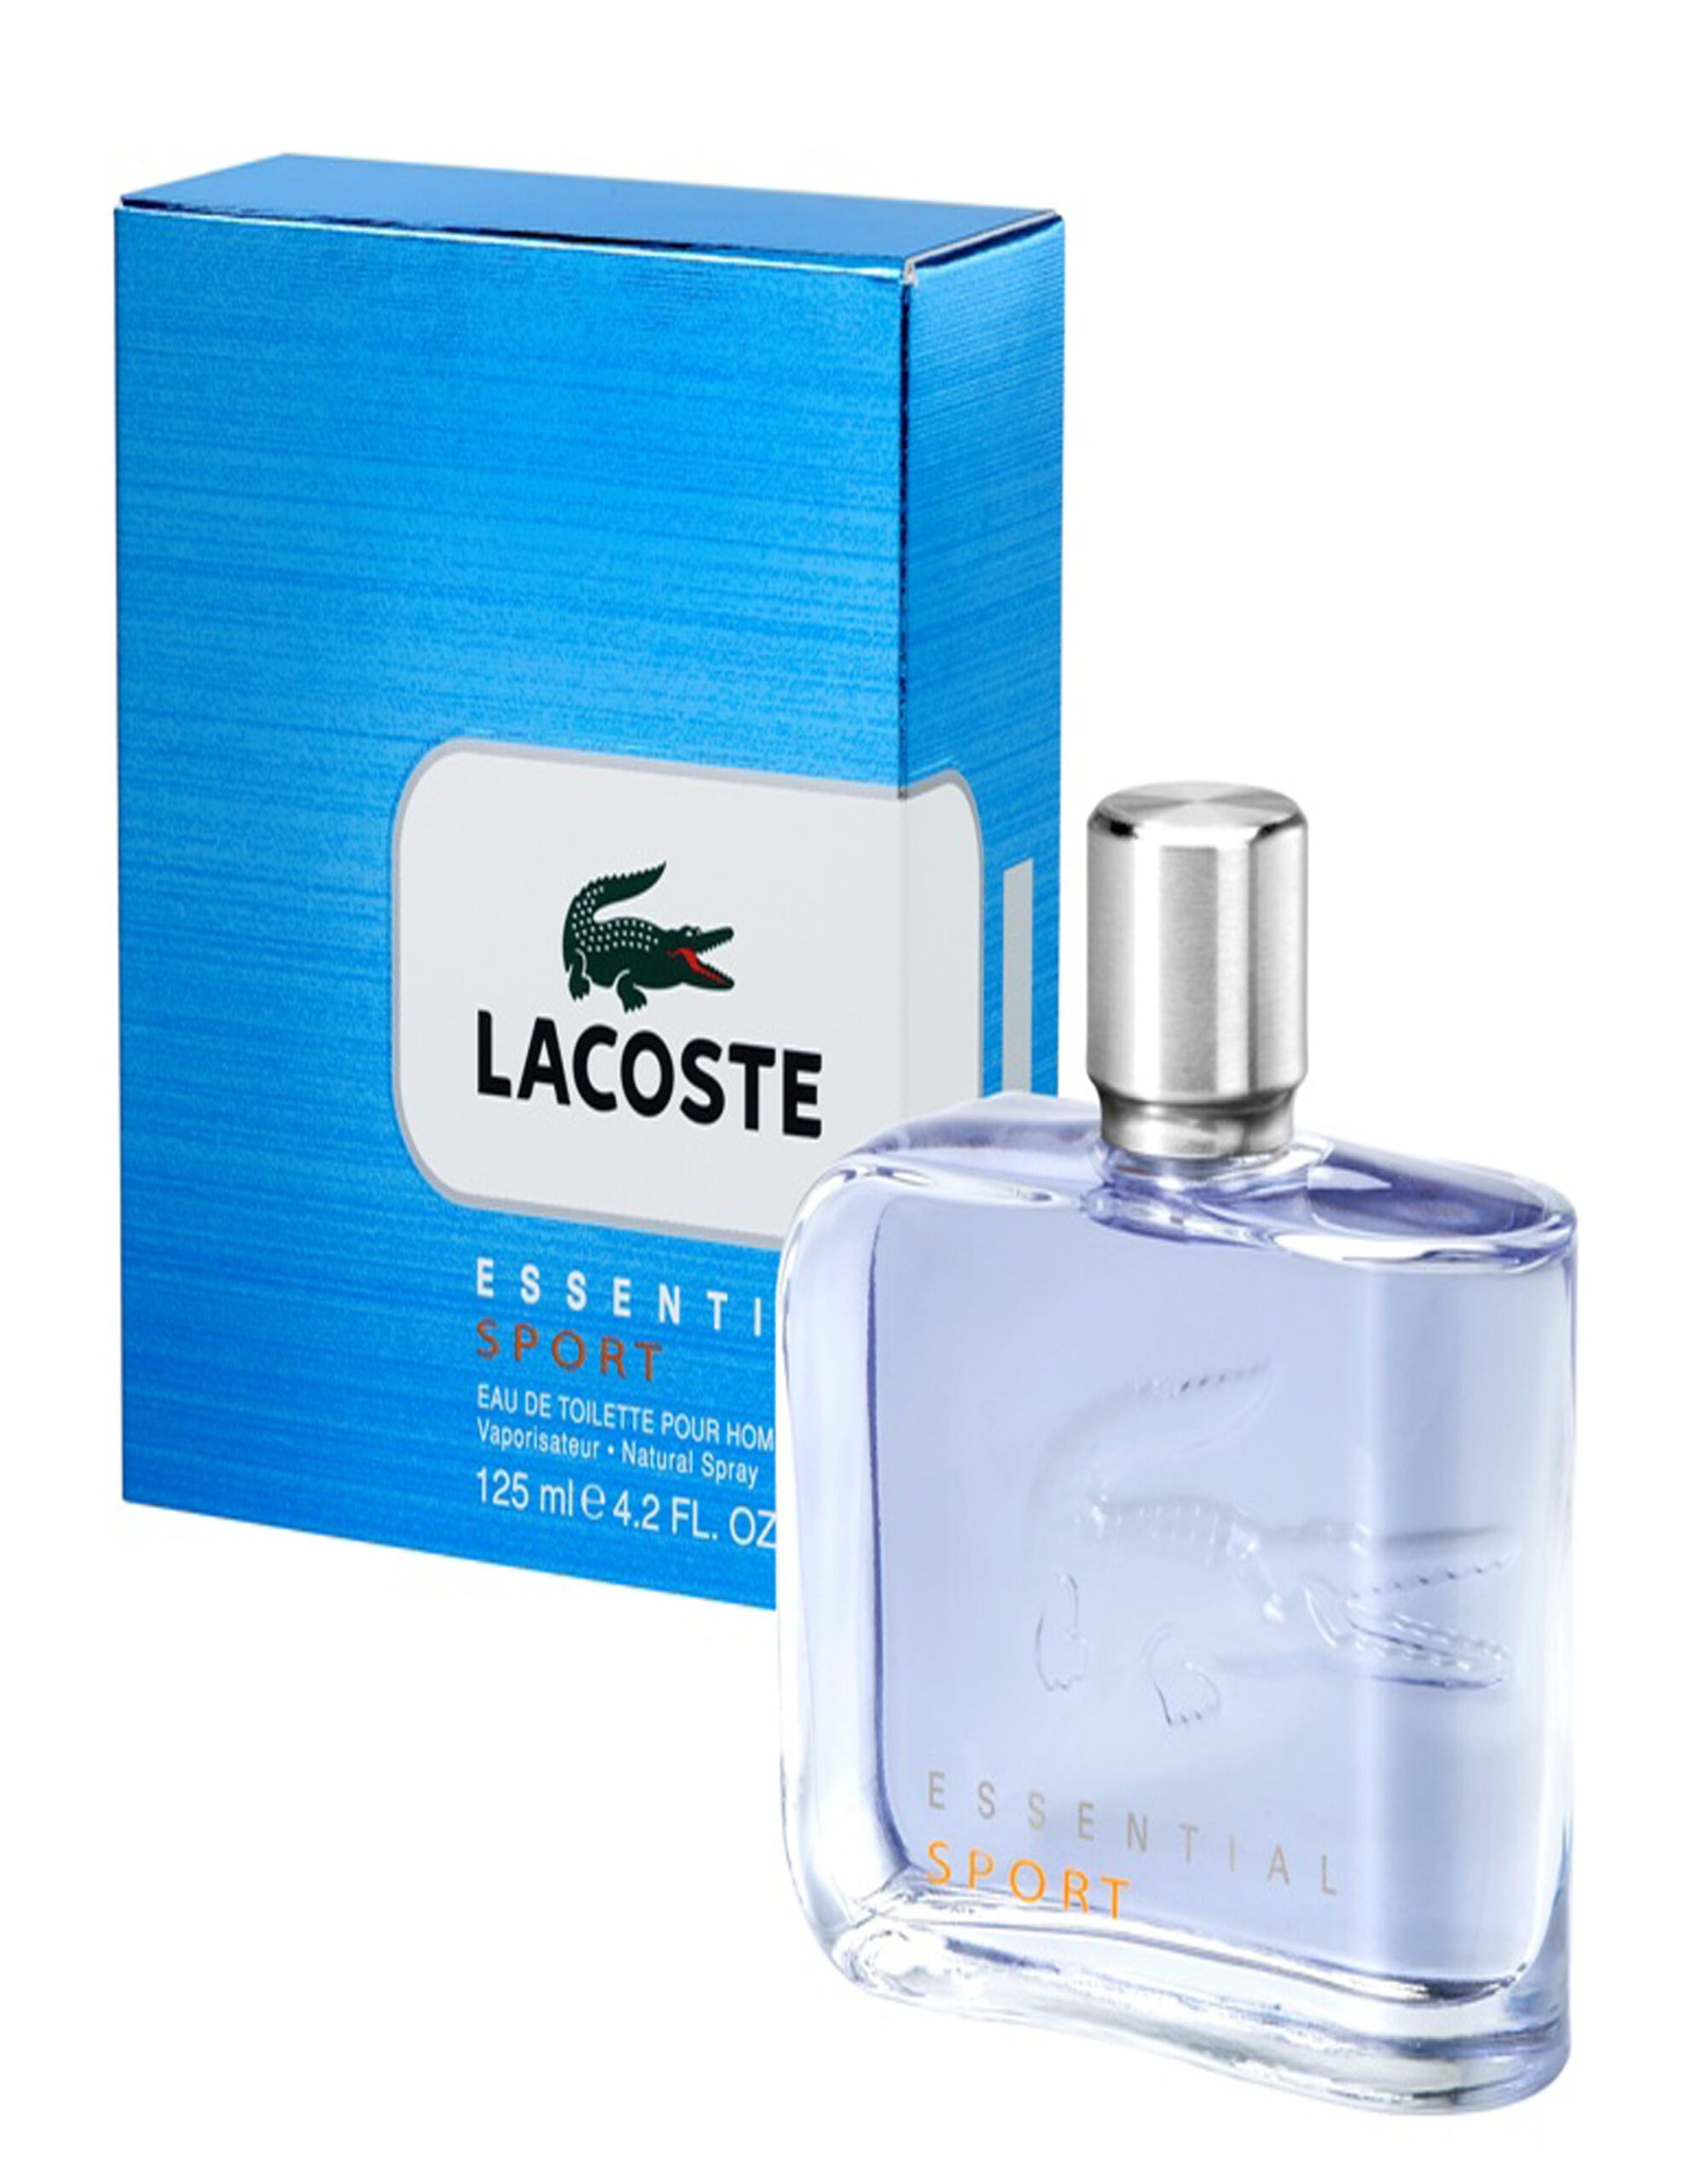 Wallpaper Lacoste Sport, Mens Perfume, Fragrance